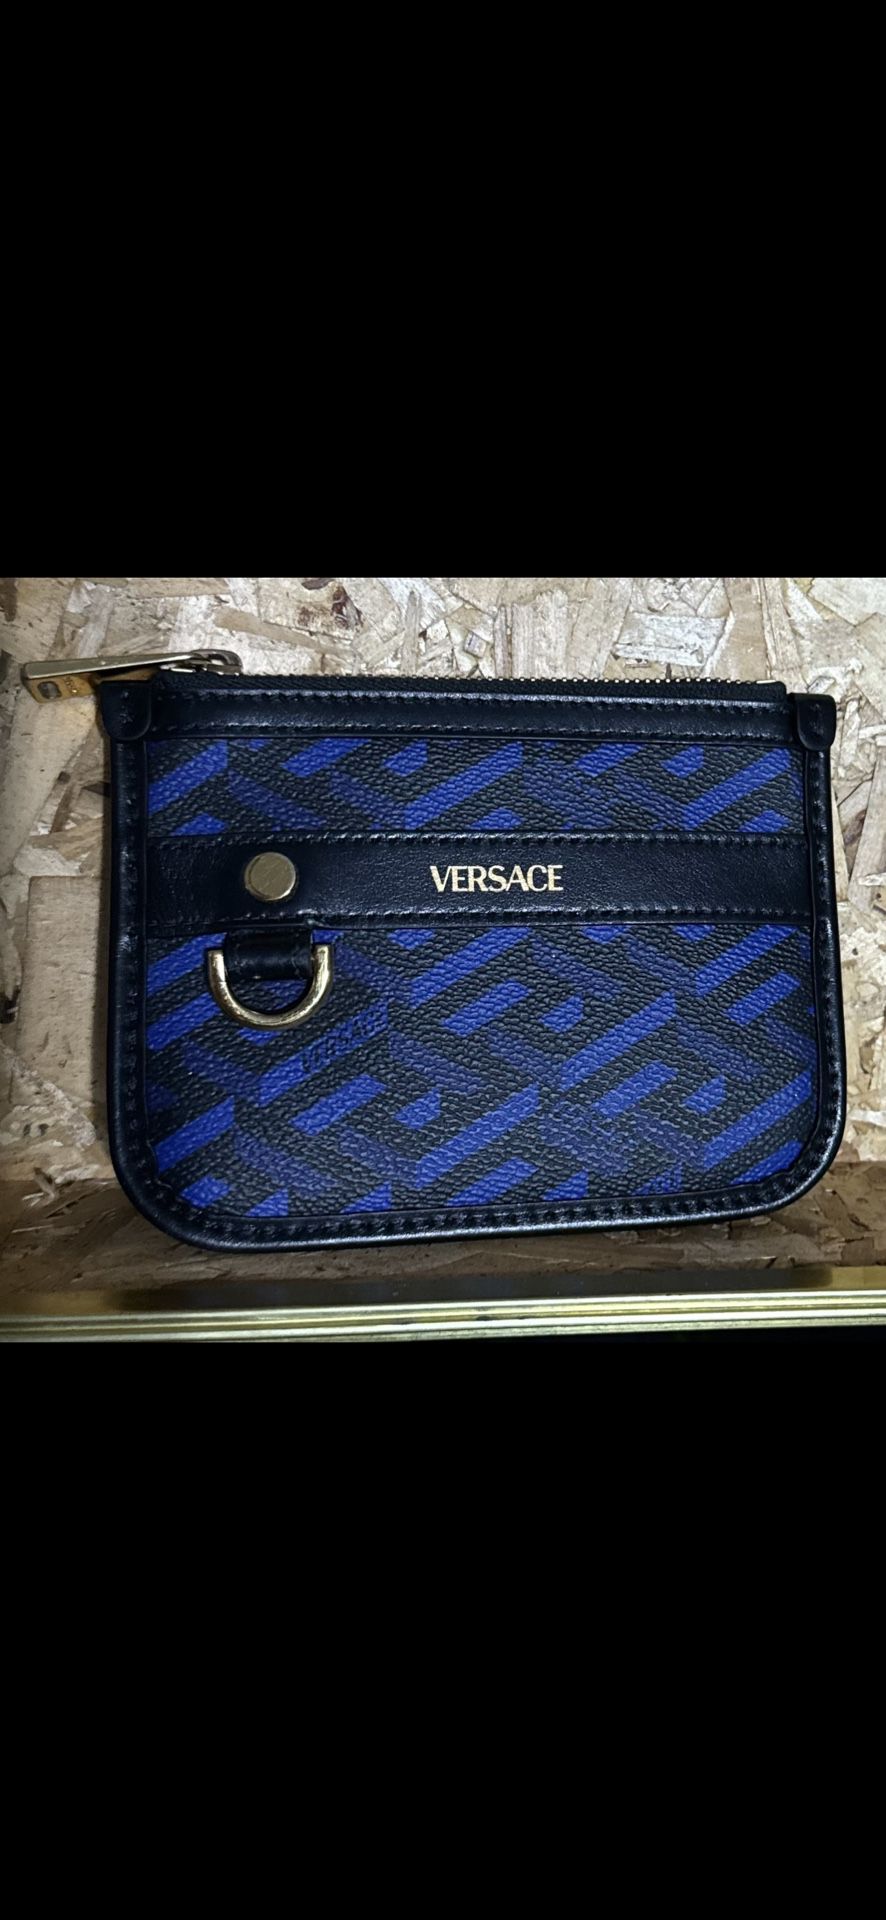 Royal Blue and Black Versace Wallet 